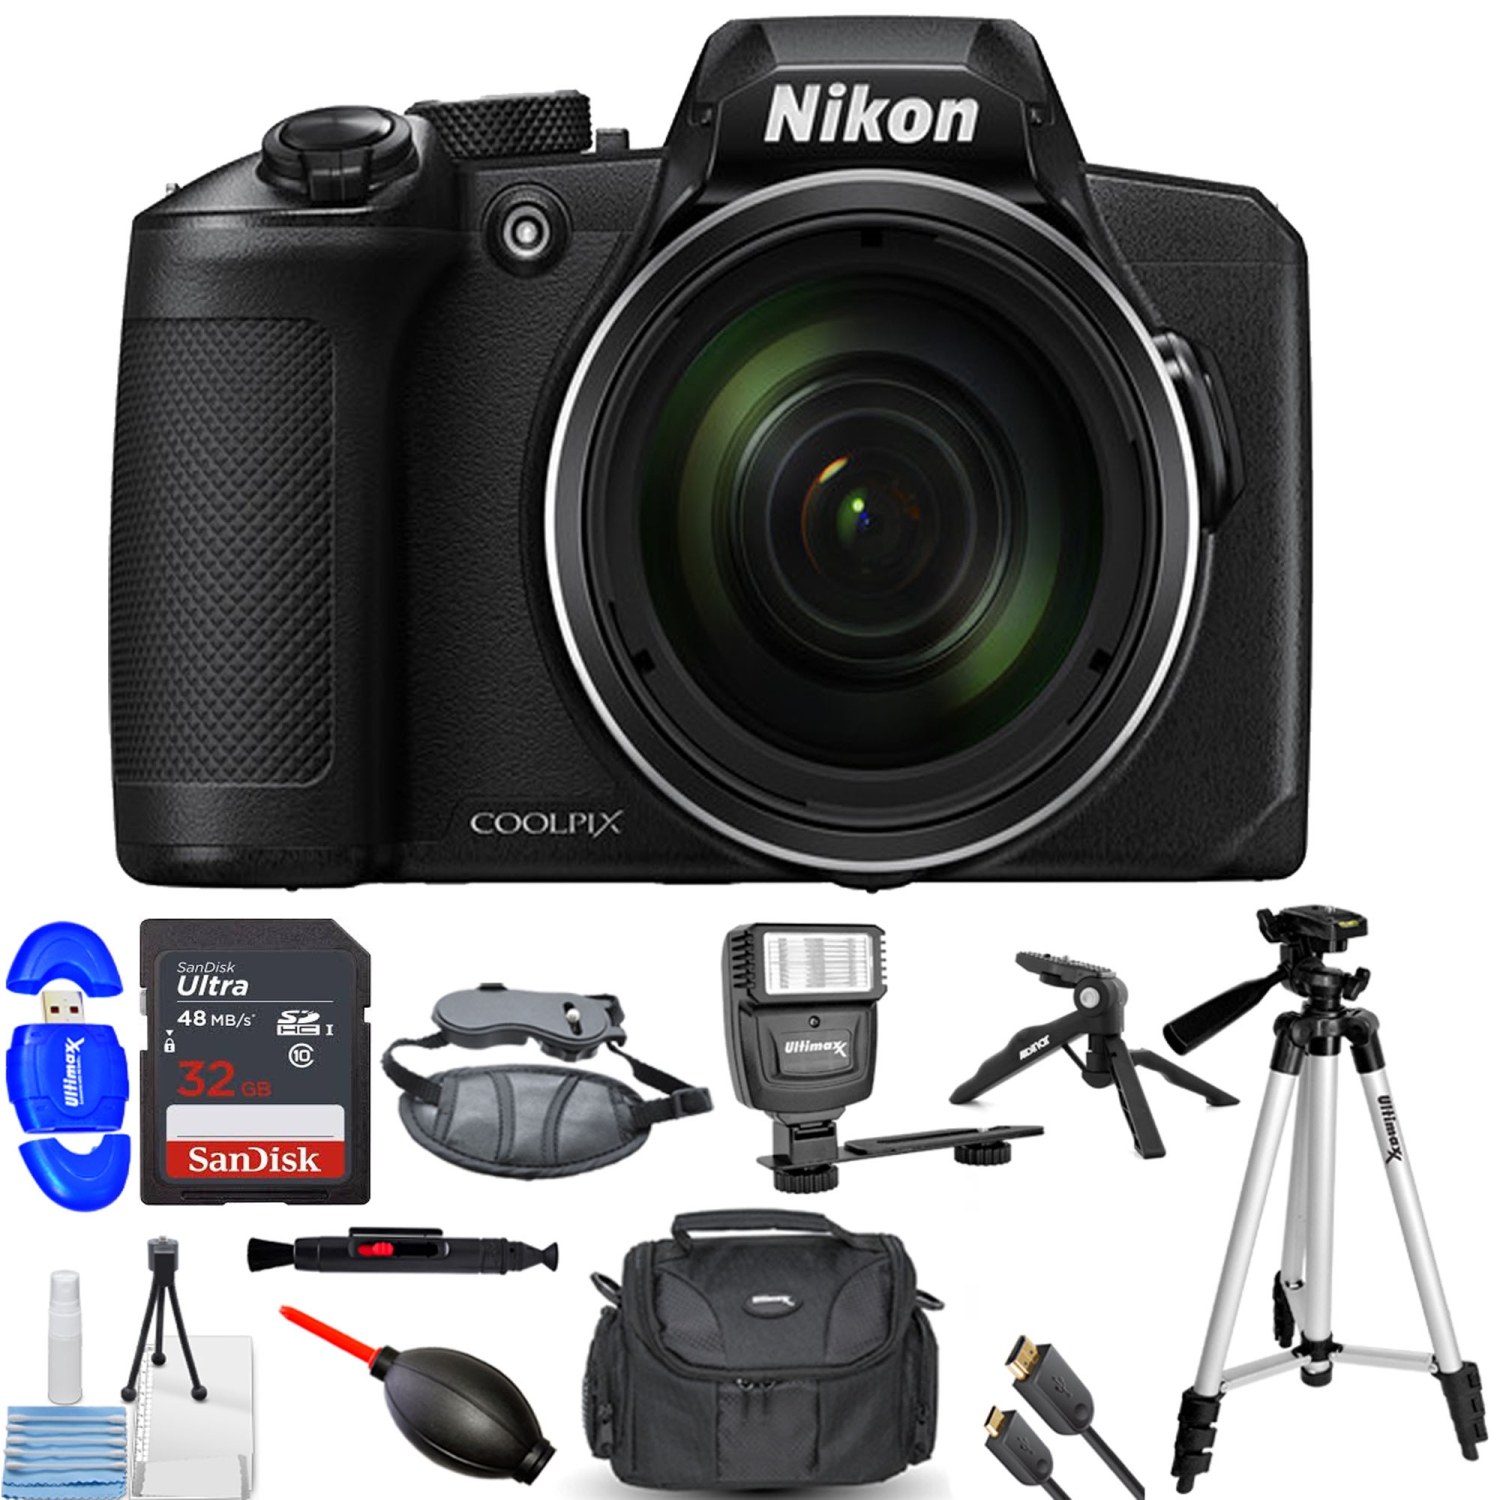 Nikon COOLPIX B600 Digital Camera (Black) with 32GB Memory Card Essential Bundle - US Version w/ Seller Warranty